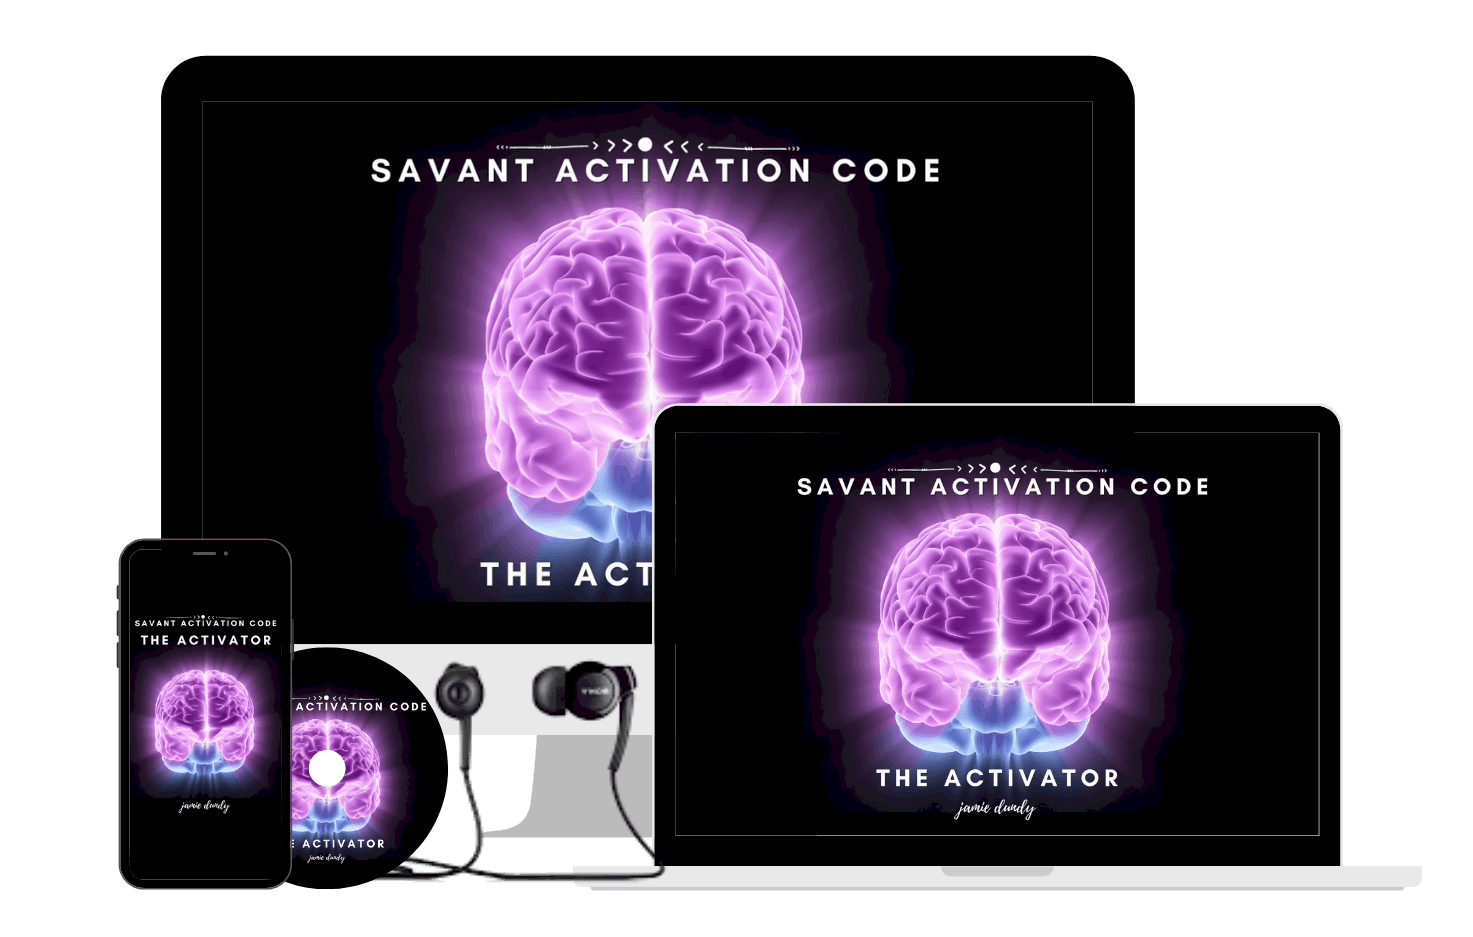  Module 1 - The Savant Activator